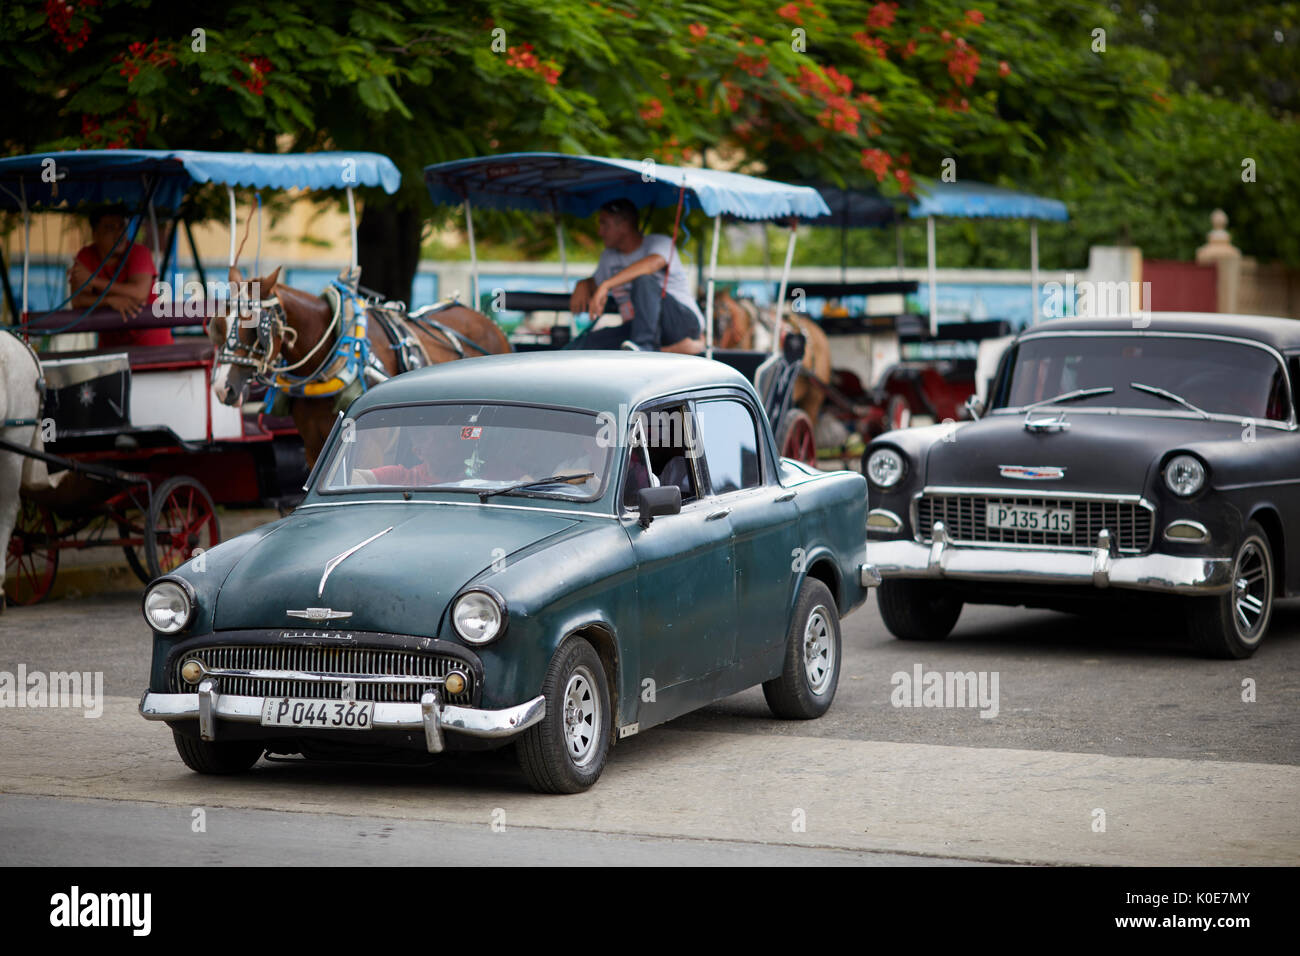 Cuban classic retro cars a British Hillman Minx and a American Chevrolet in Varadero, Cuba, a Caribbean island nation under communist rule Stock Photo